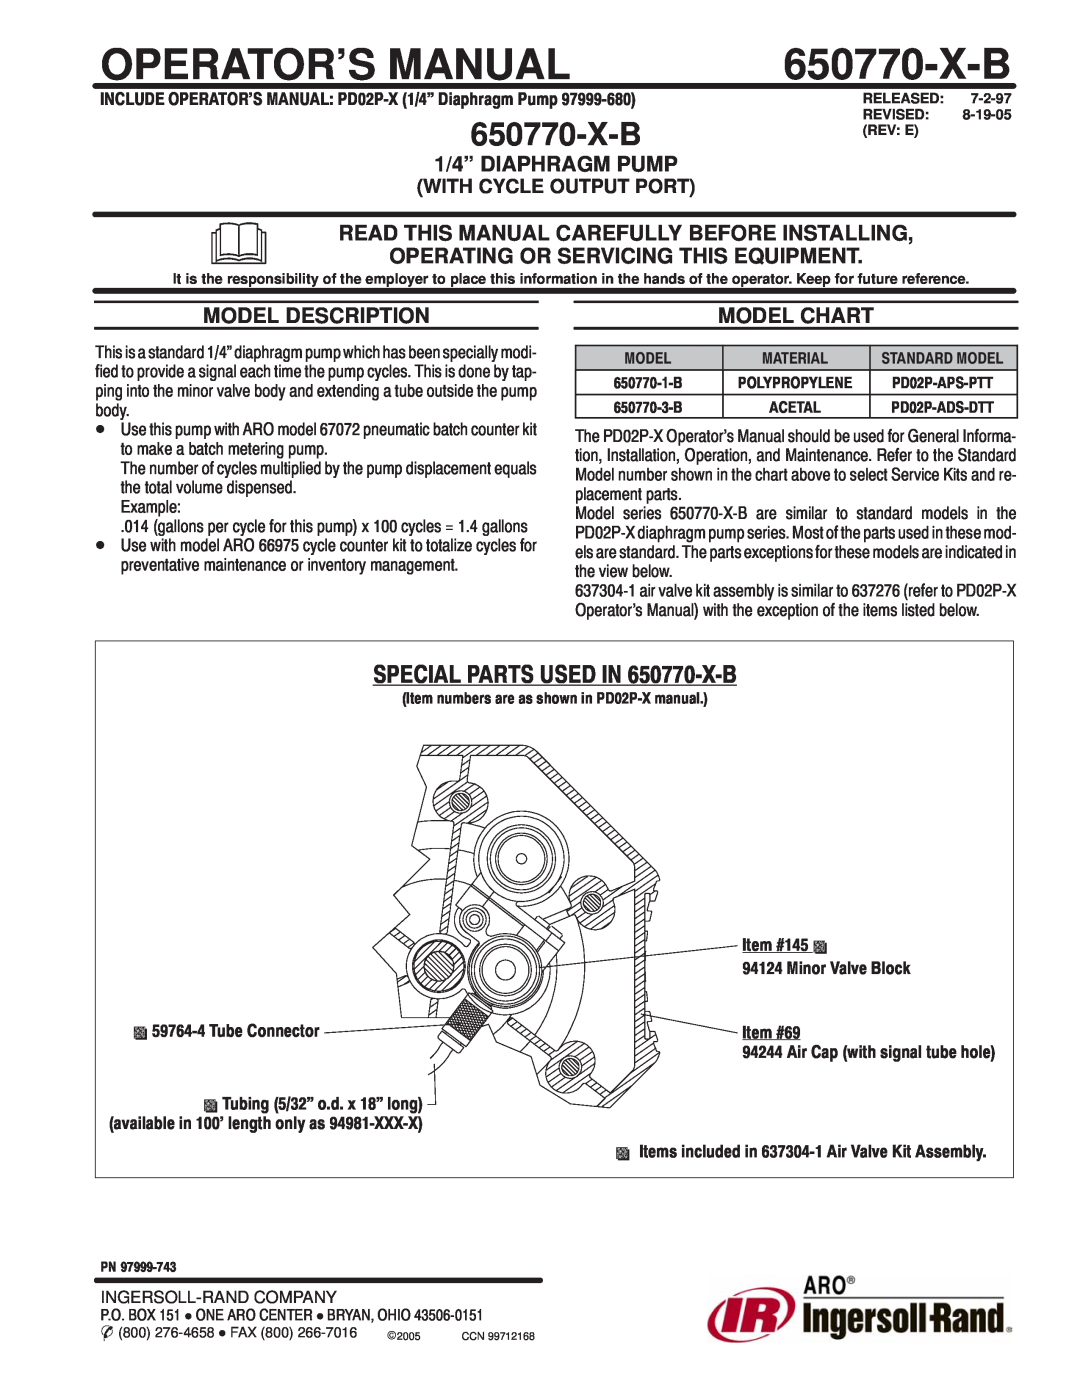 Ingersoll-Rand 650770-X-B manual Operator’S Manual, 1/4” DIAPHRAGM PUMP, Read This Manual Carefully Before Installing 